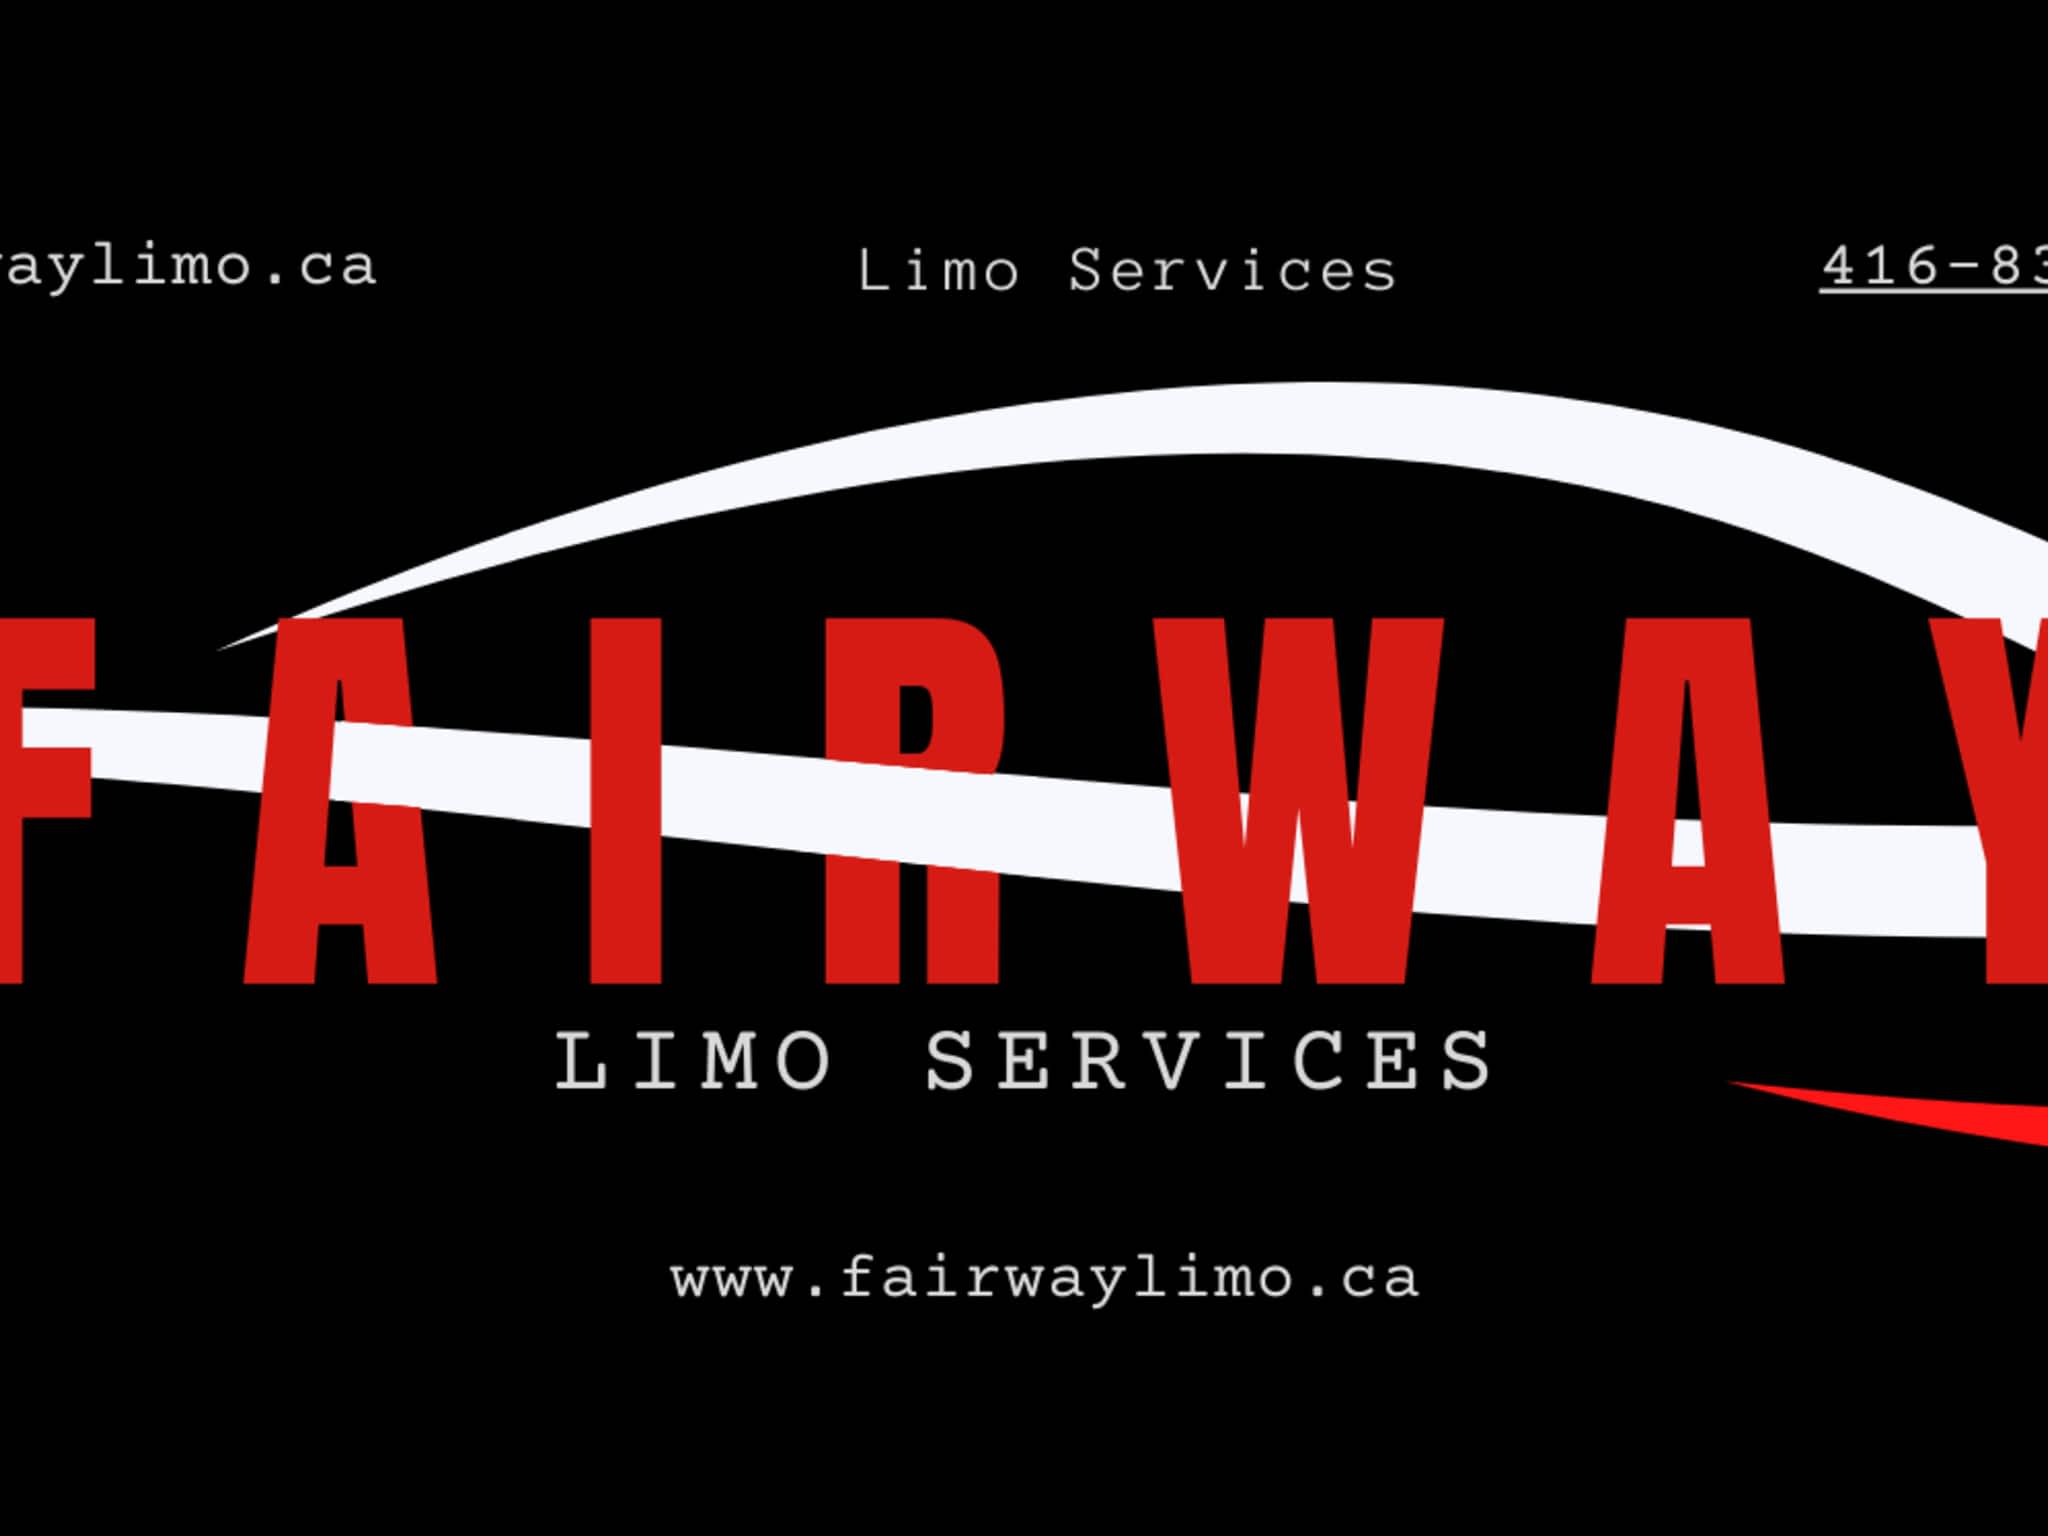 photo Fairway Limo Services